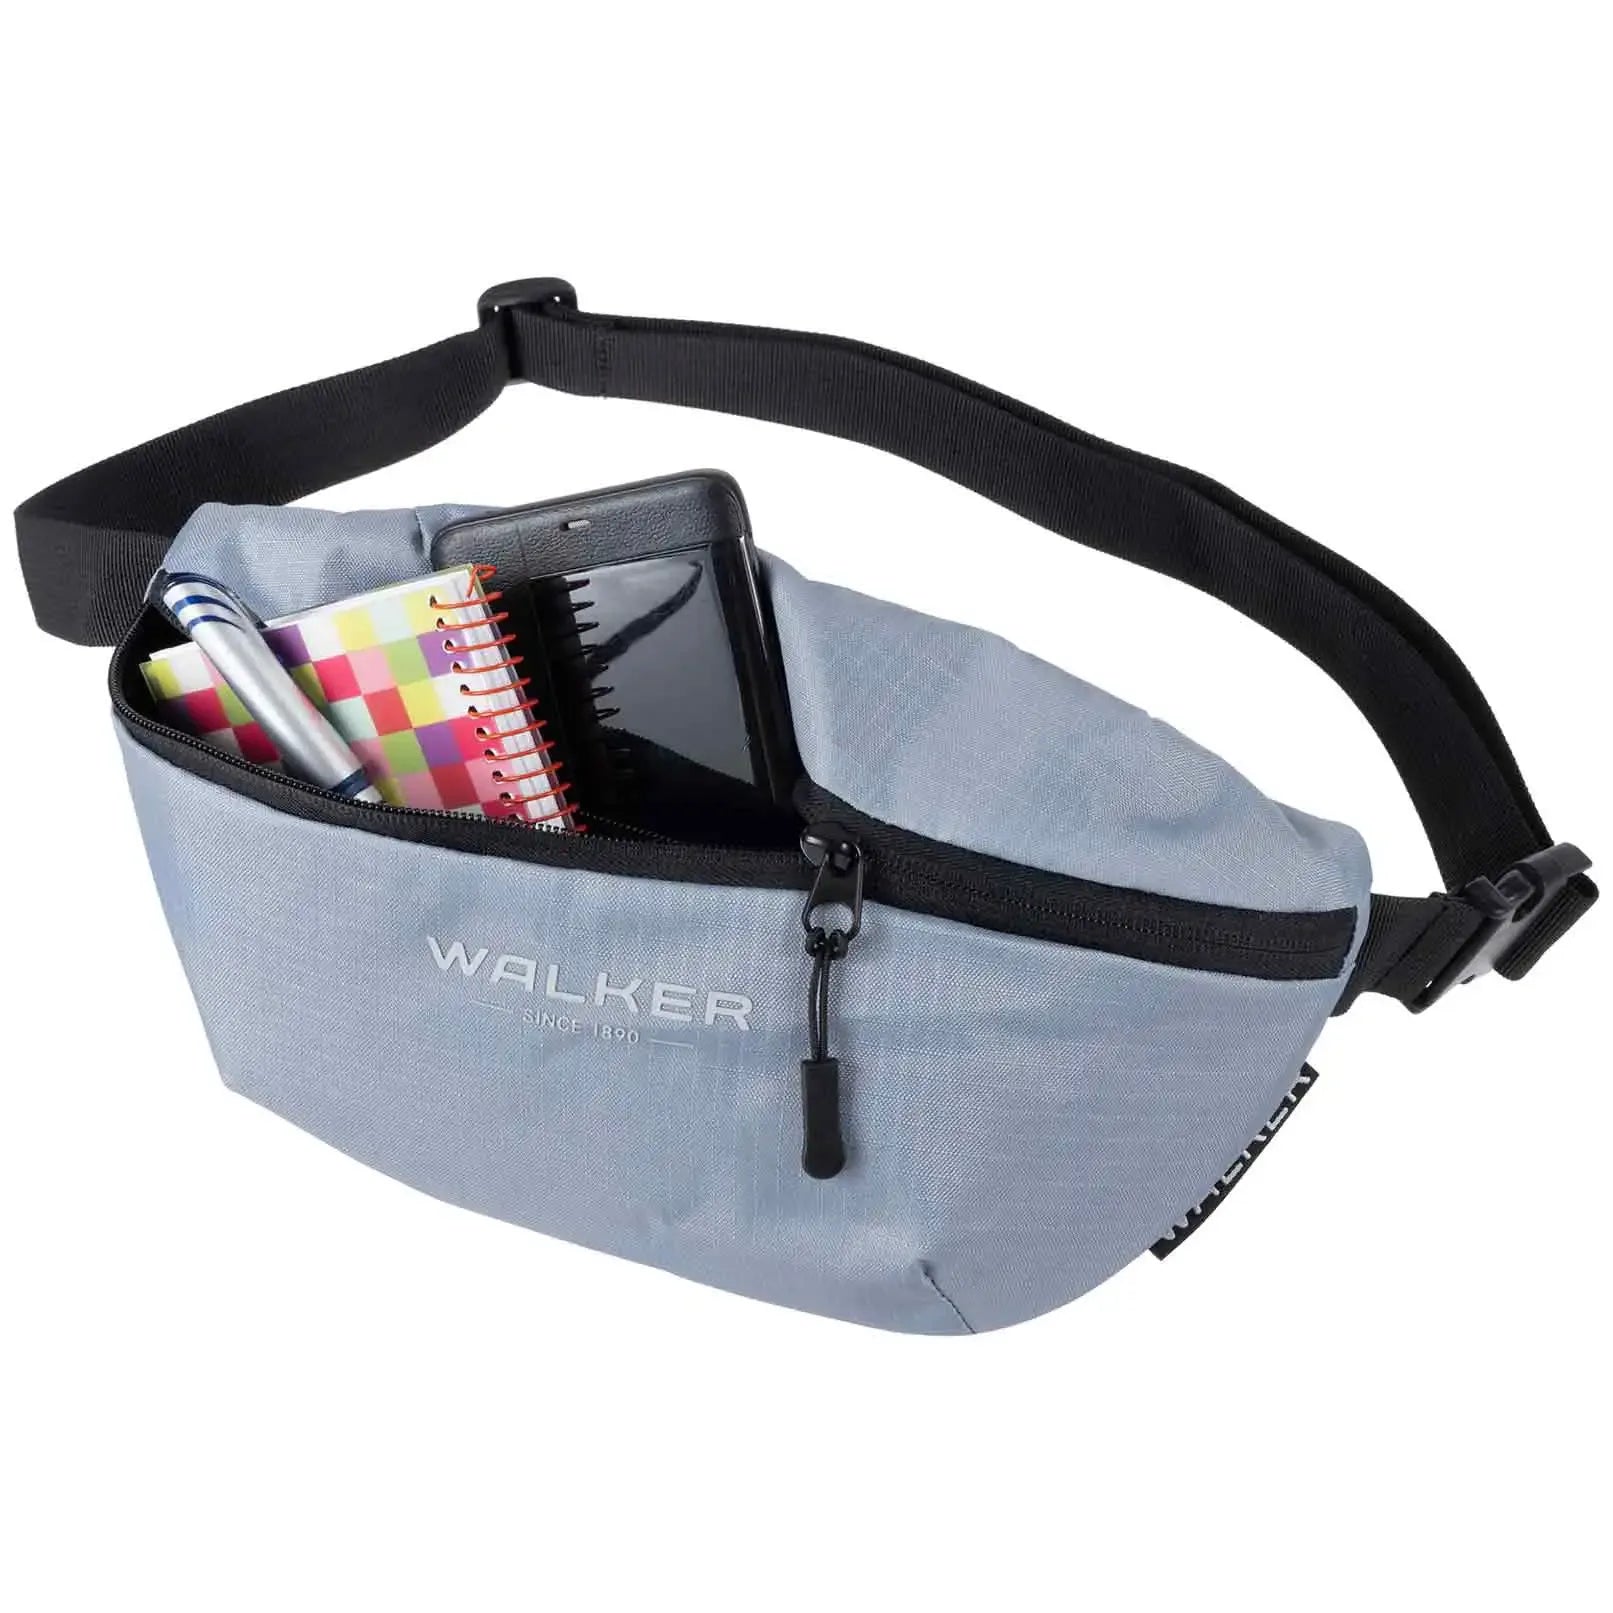 Walker Finn Concept Lifestyle belt bag 31 cm - Malibu